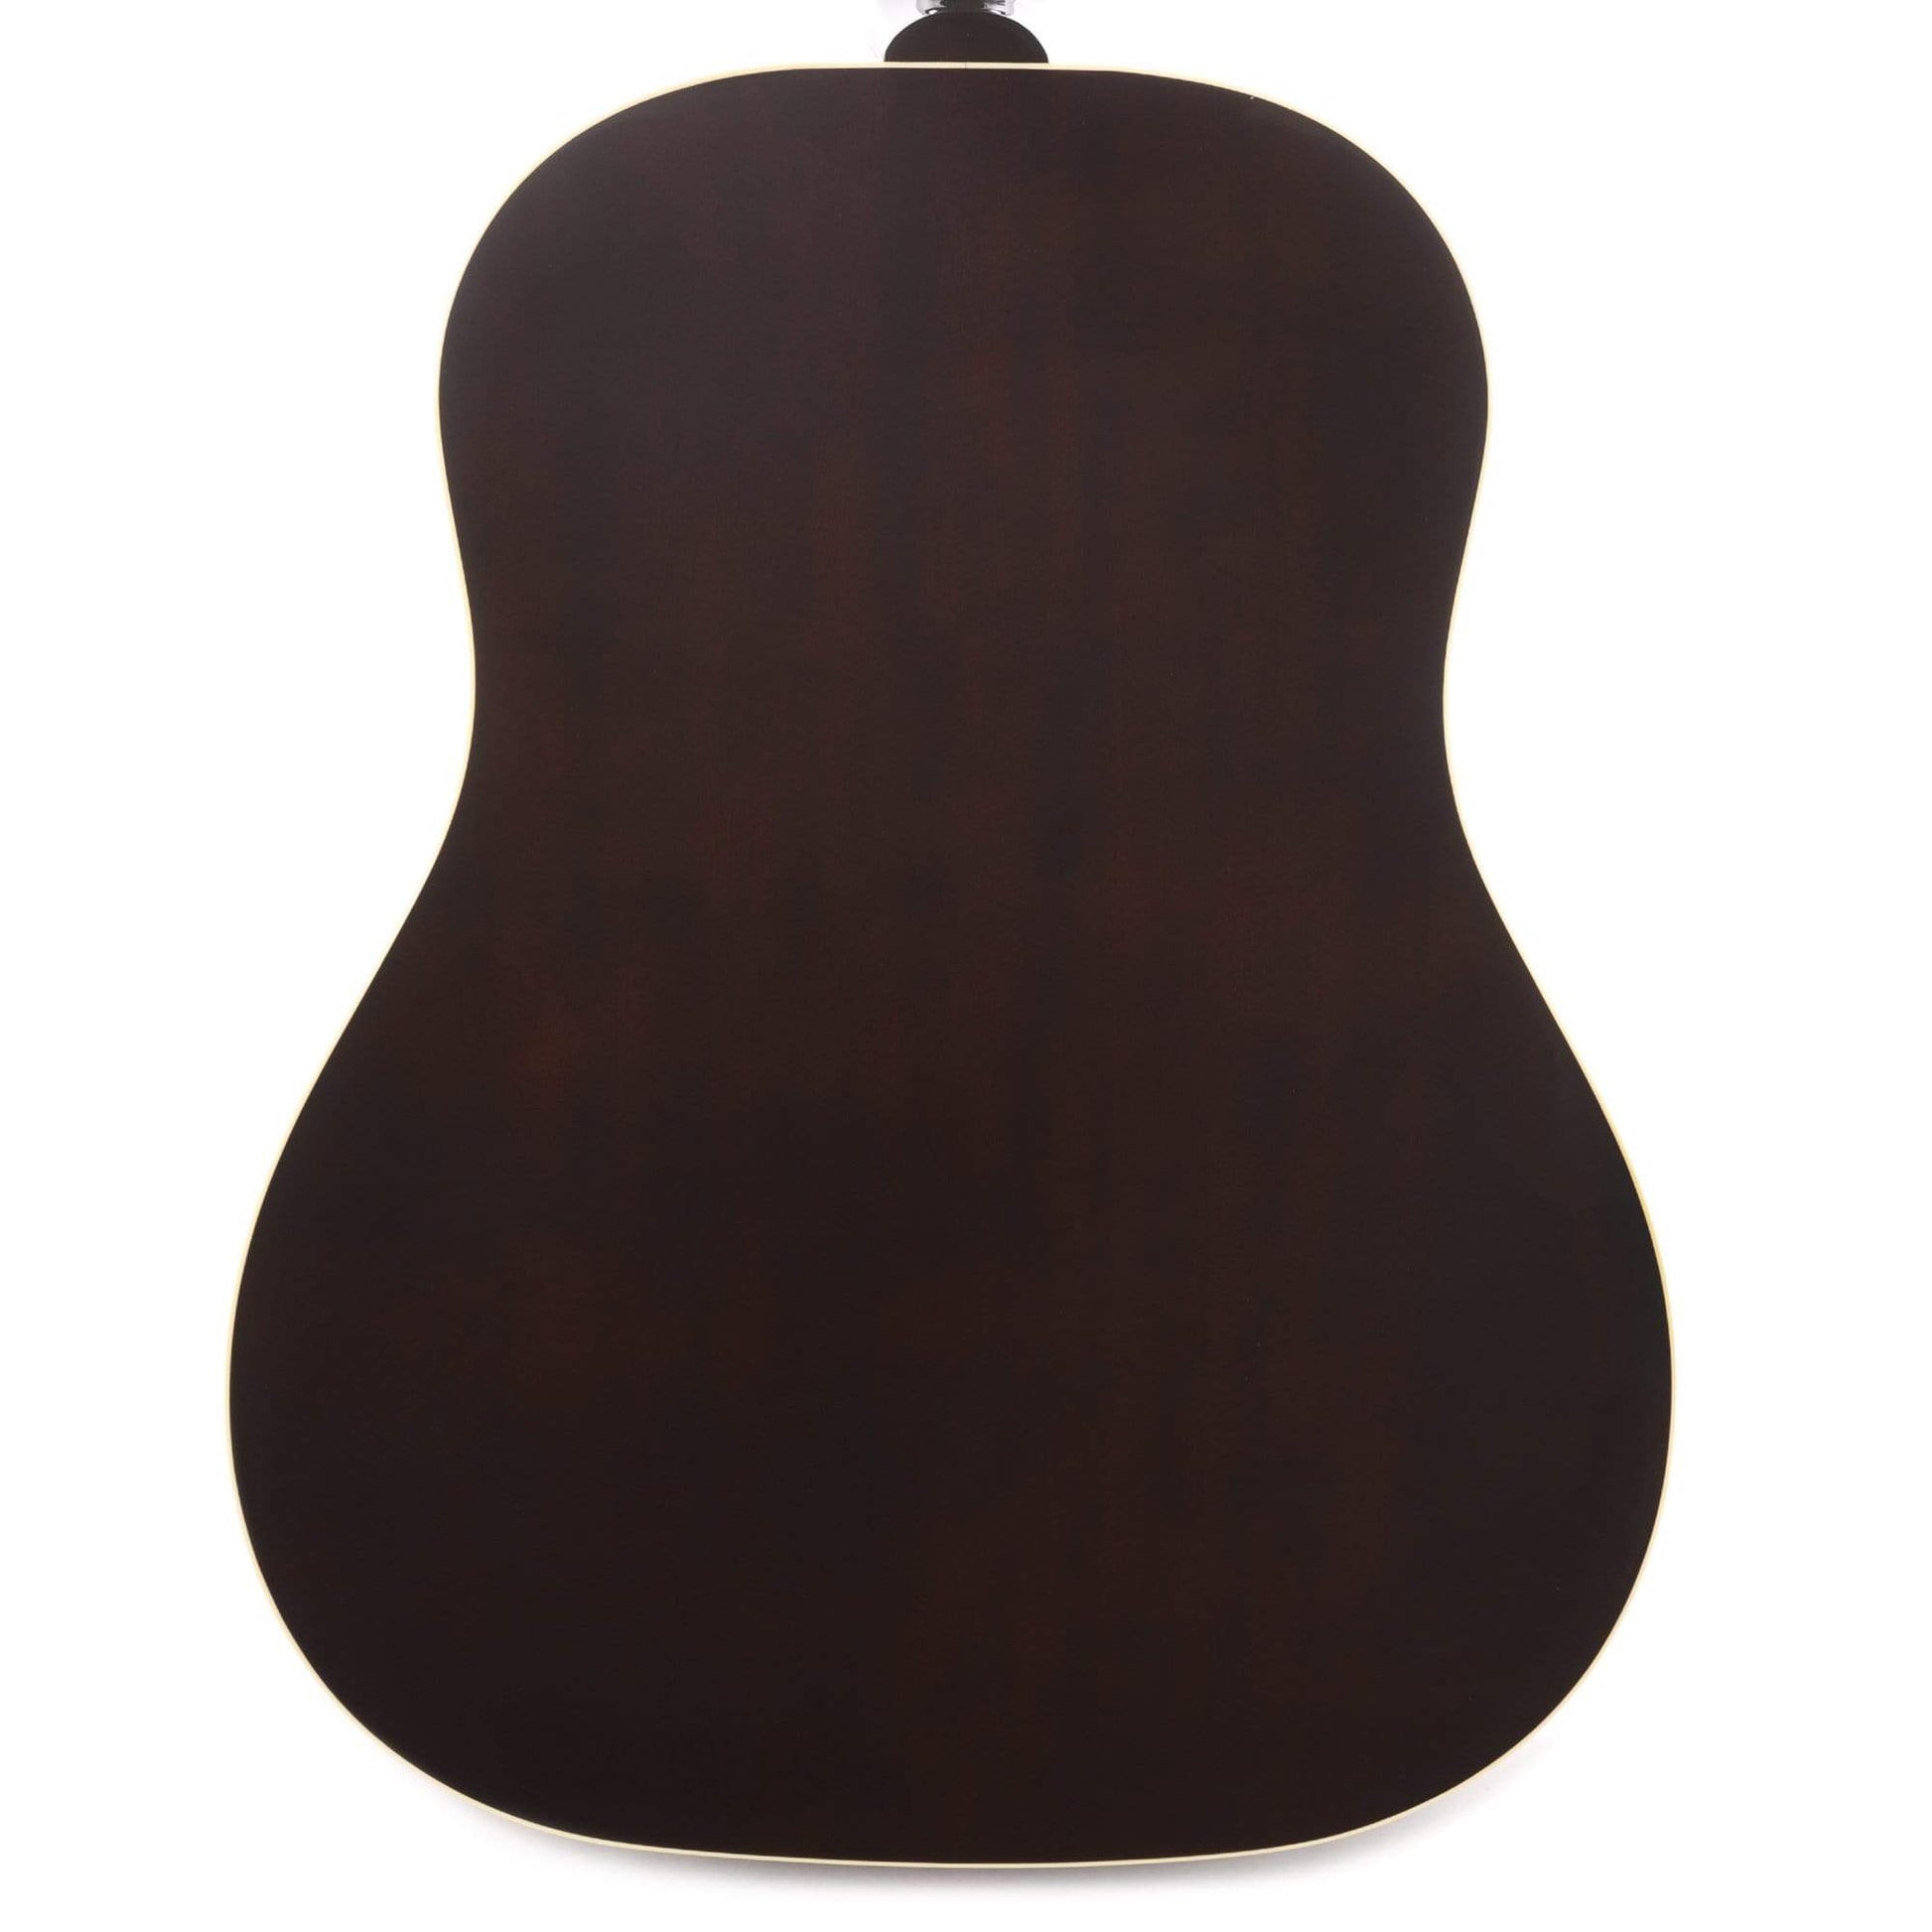 Gibson Montana J-45 Standard 12-String Vintage Sunburst Acoustic Guitars / 12-String